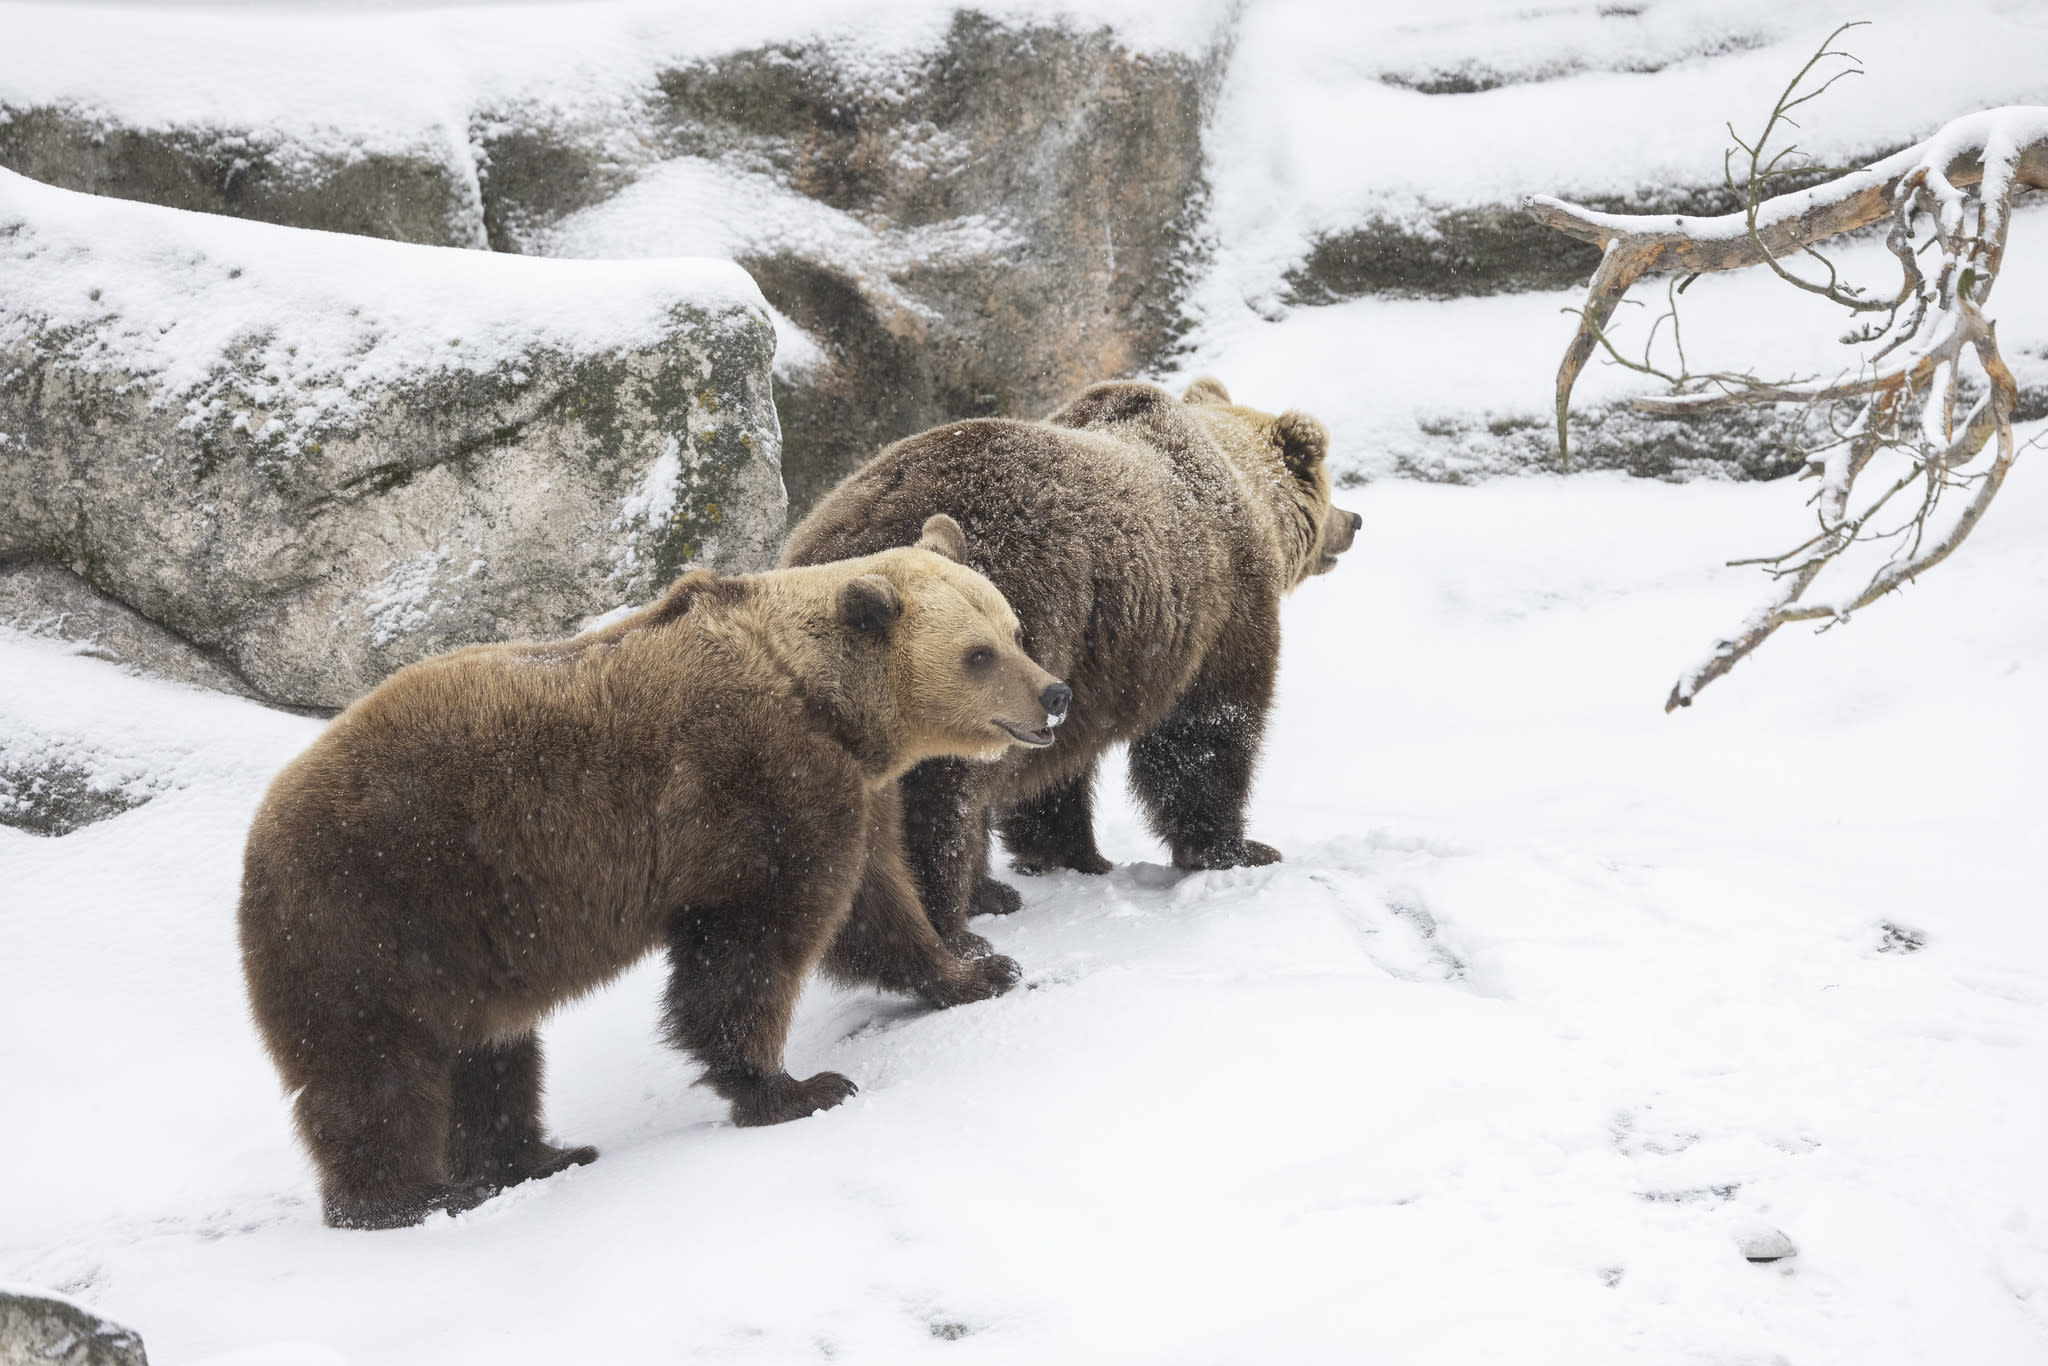 Helsinki Zoo bears play in the snow after hibernation